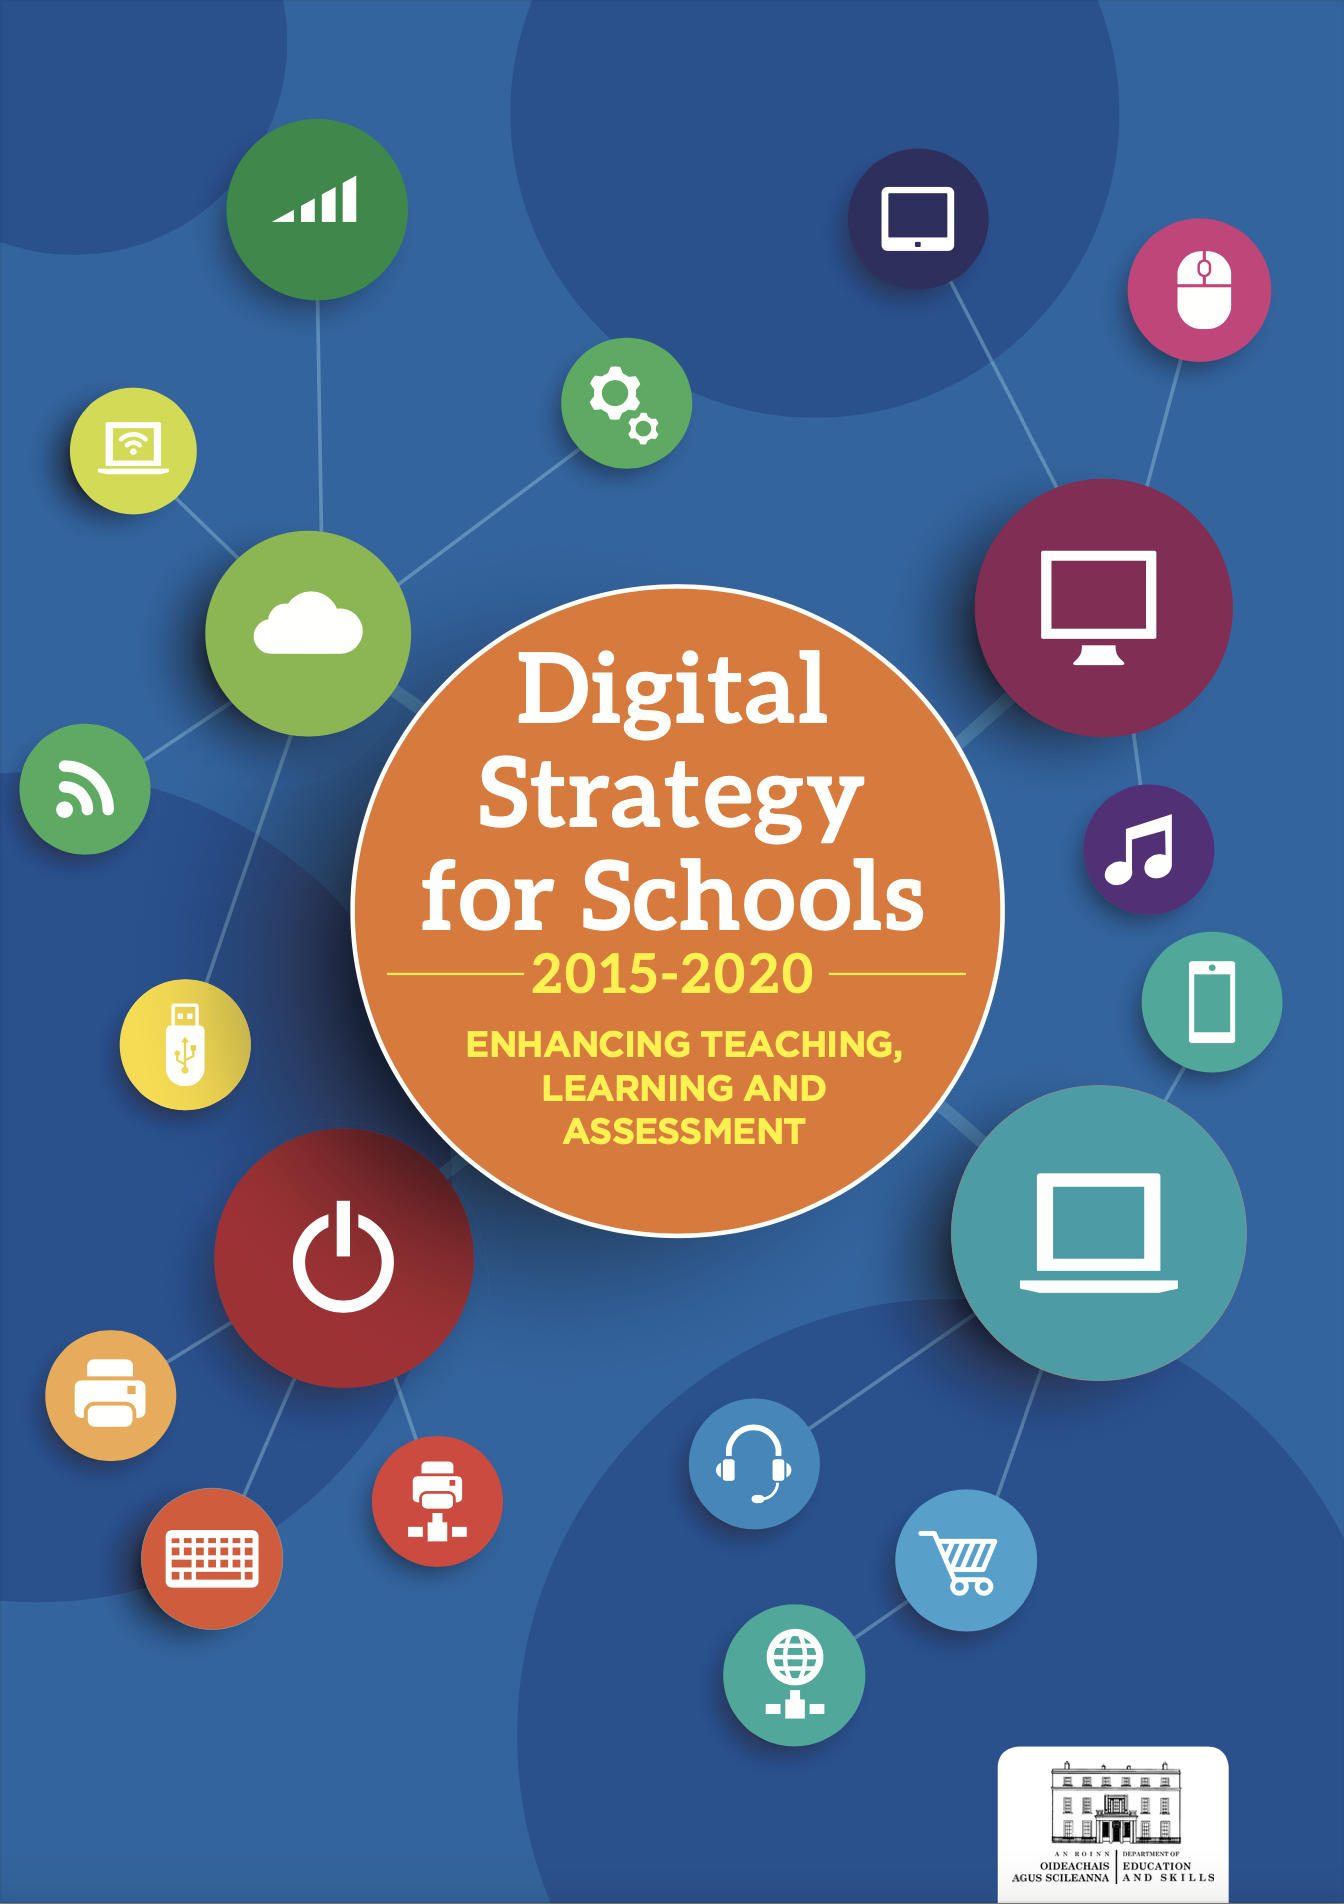 Digital Strategy for Schools 2015-2020